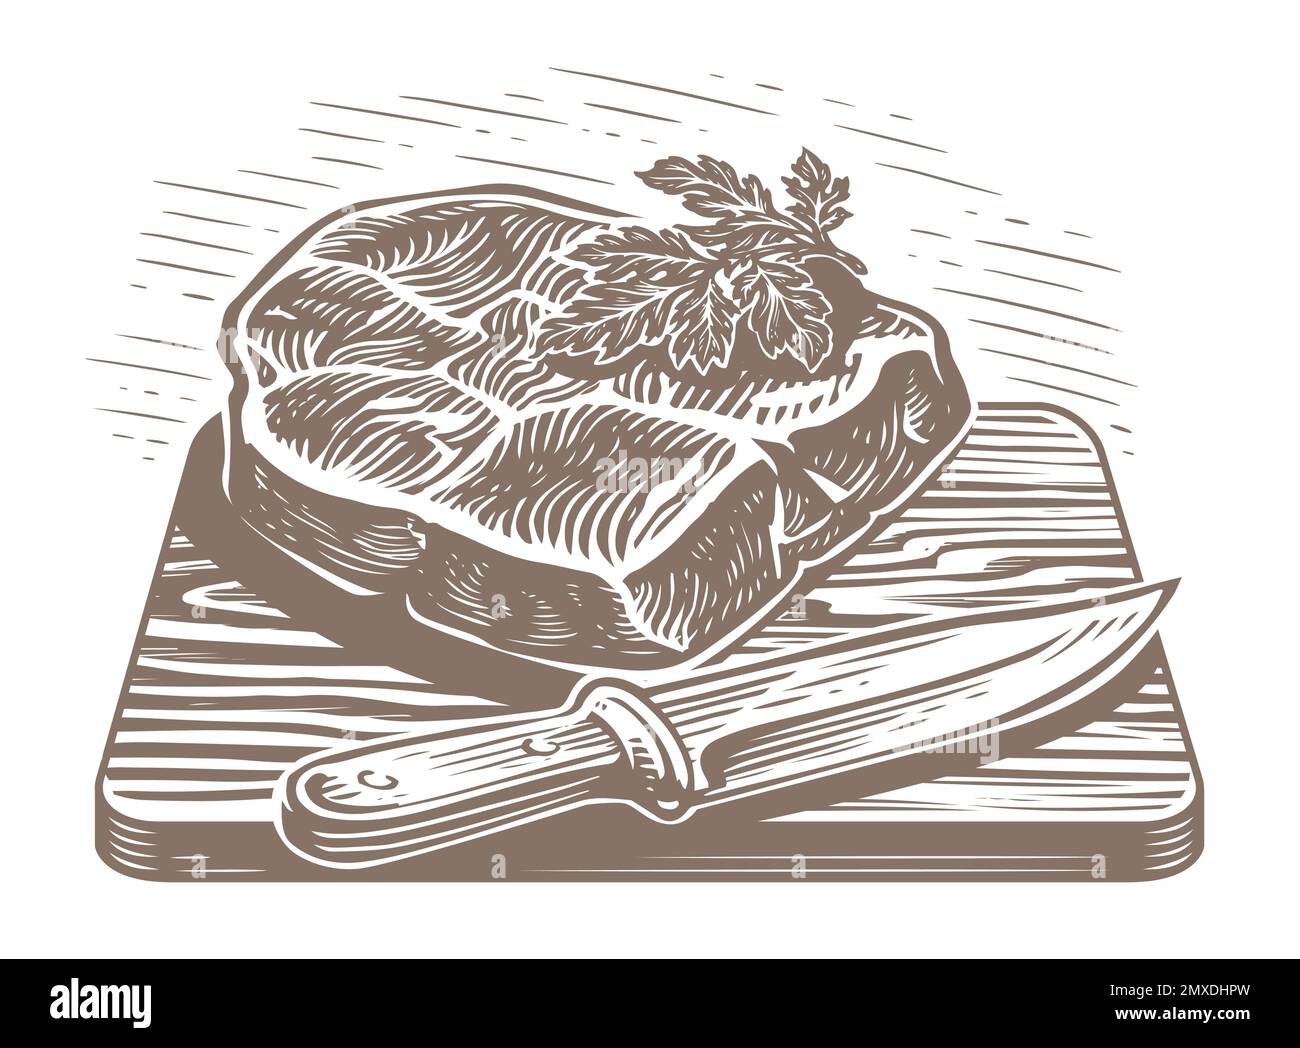 Hand drawn sliced grilled bull steak on wooden board with knife. Illustration for restaurant menu or butcher shop Stock Vector